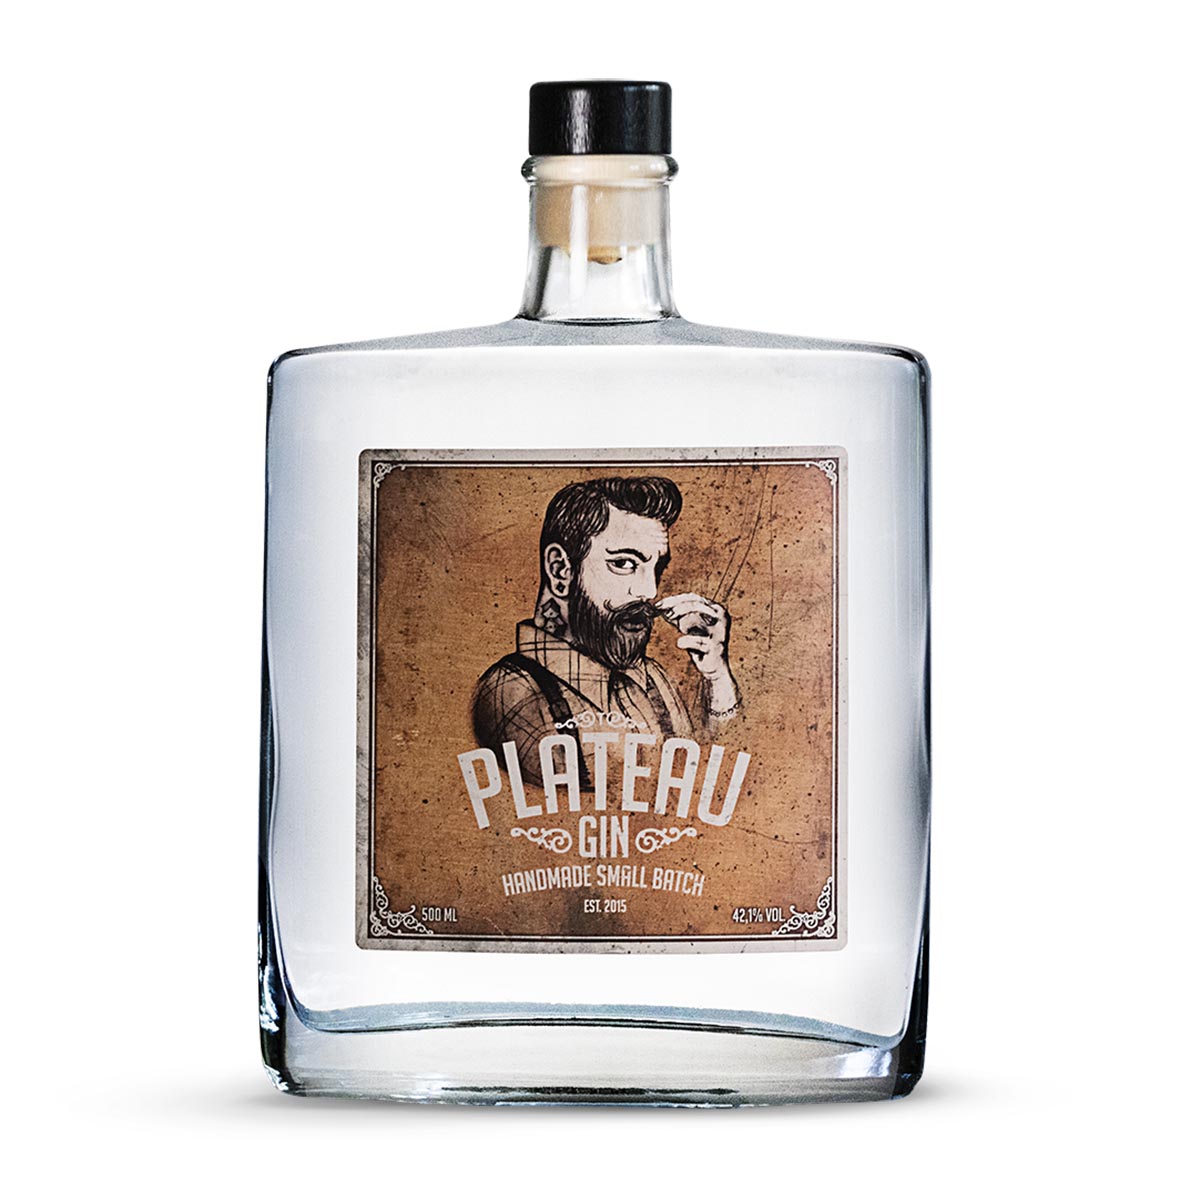 Plateau Gin